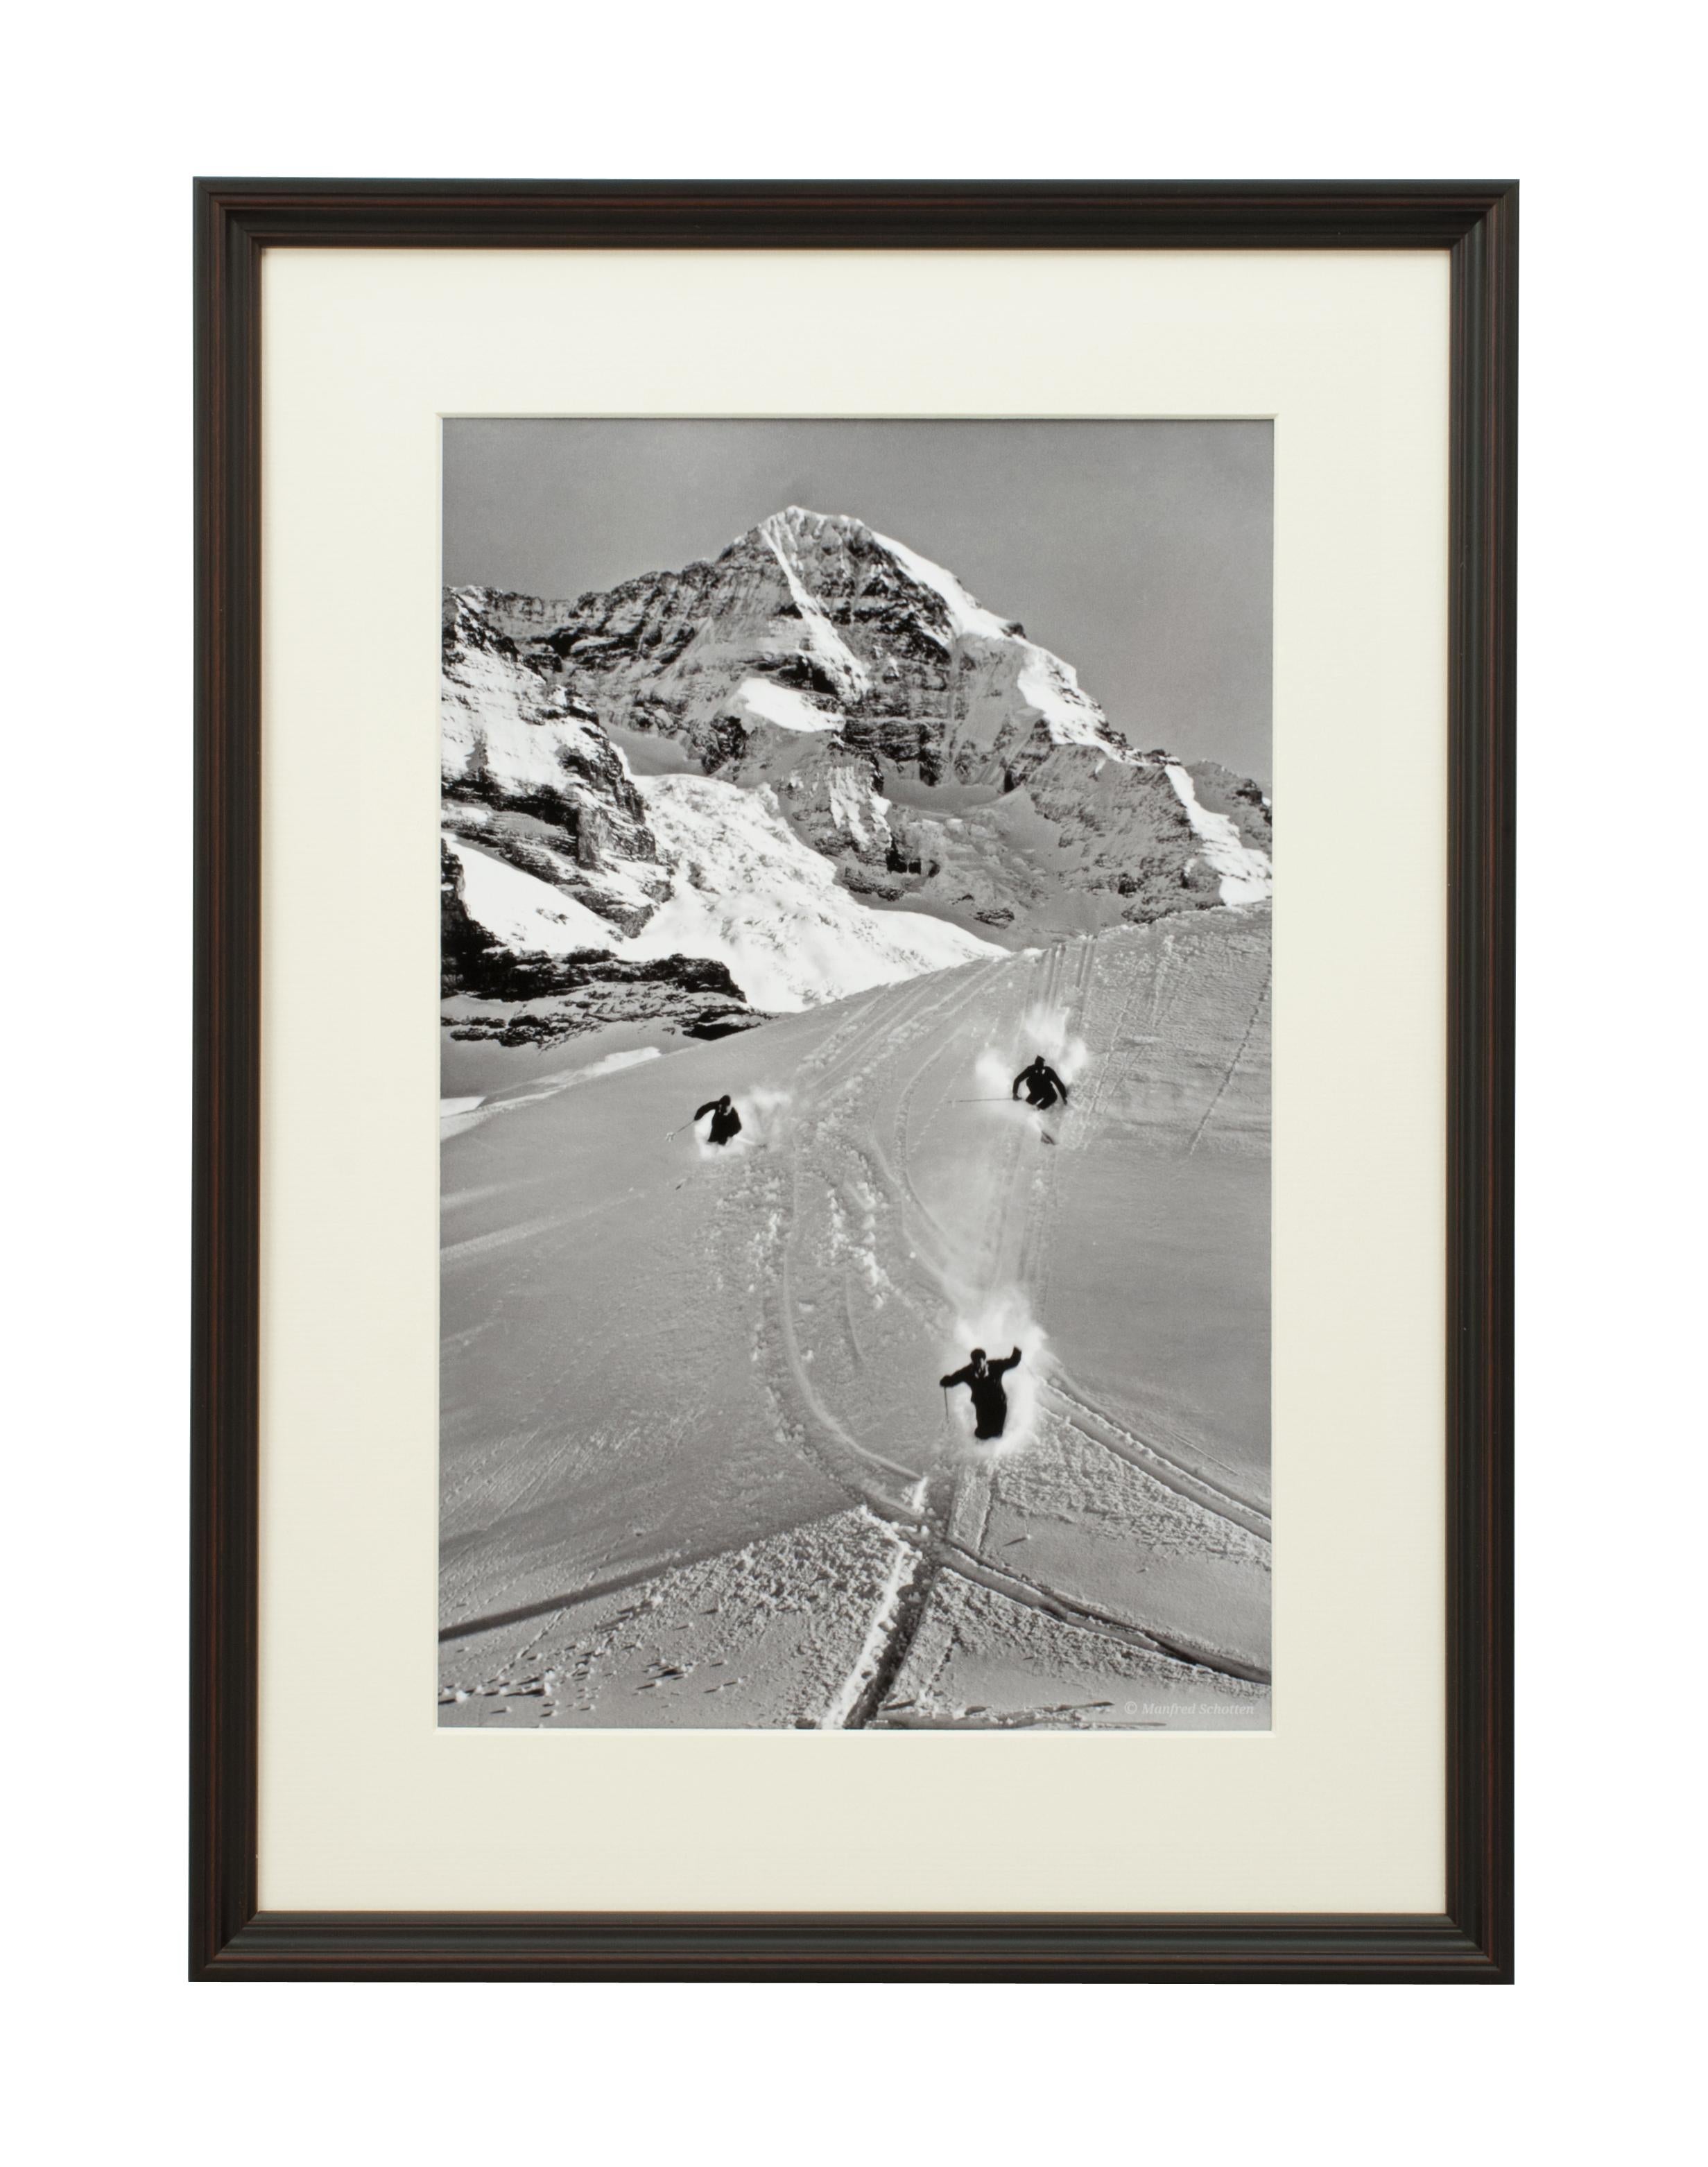 Vintage-Ski-Fotografie, gerahmte Alpin-Ski-Fotografie, Scheidegg.
sCHEIDEGG